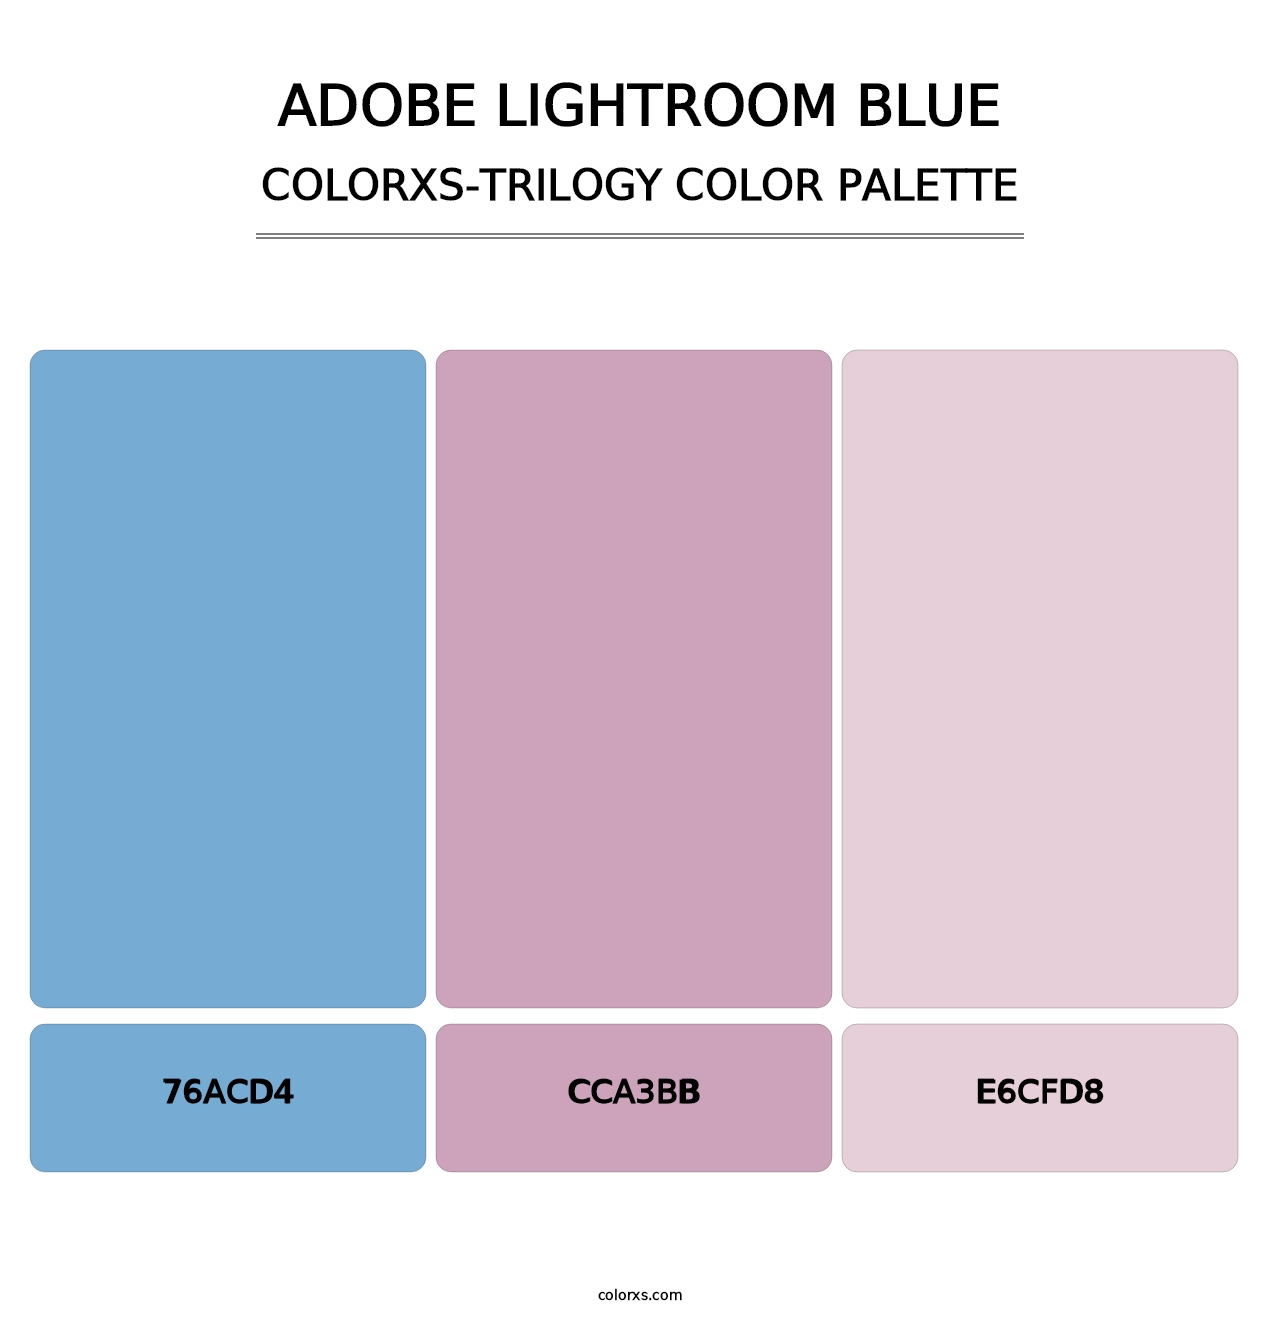 Adobe Lightroom Blue - Colorxs Trilogy Palette